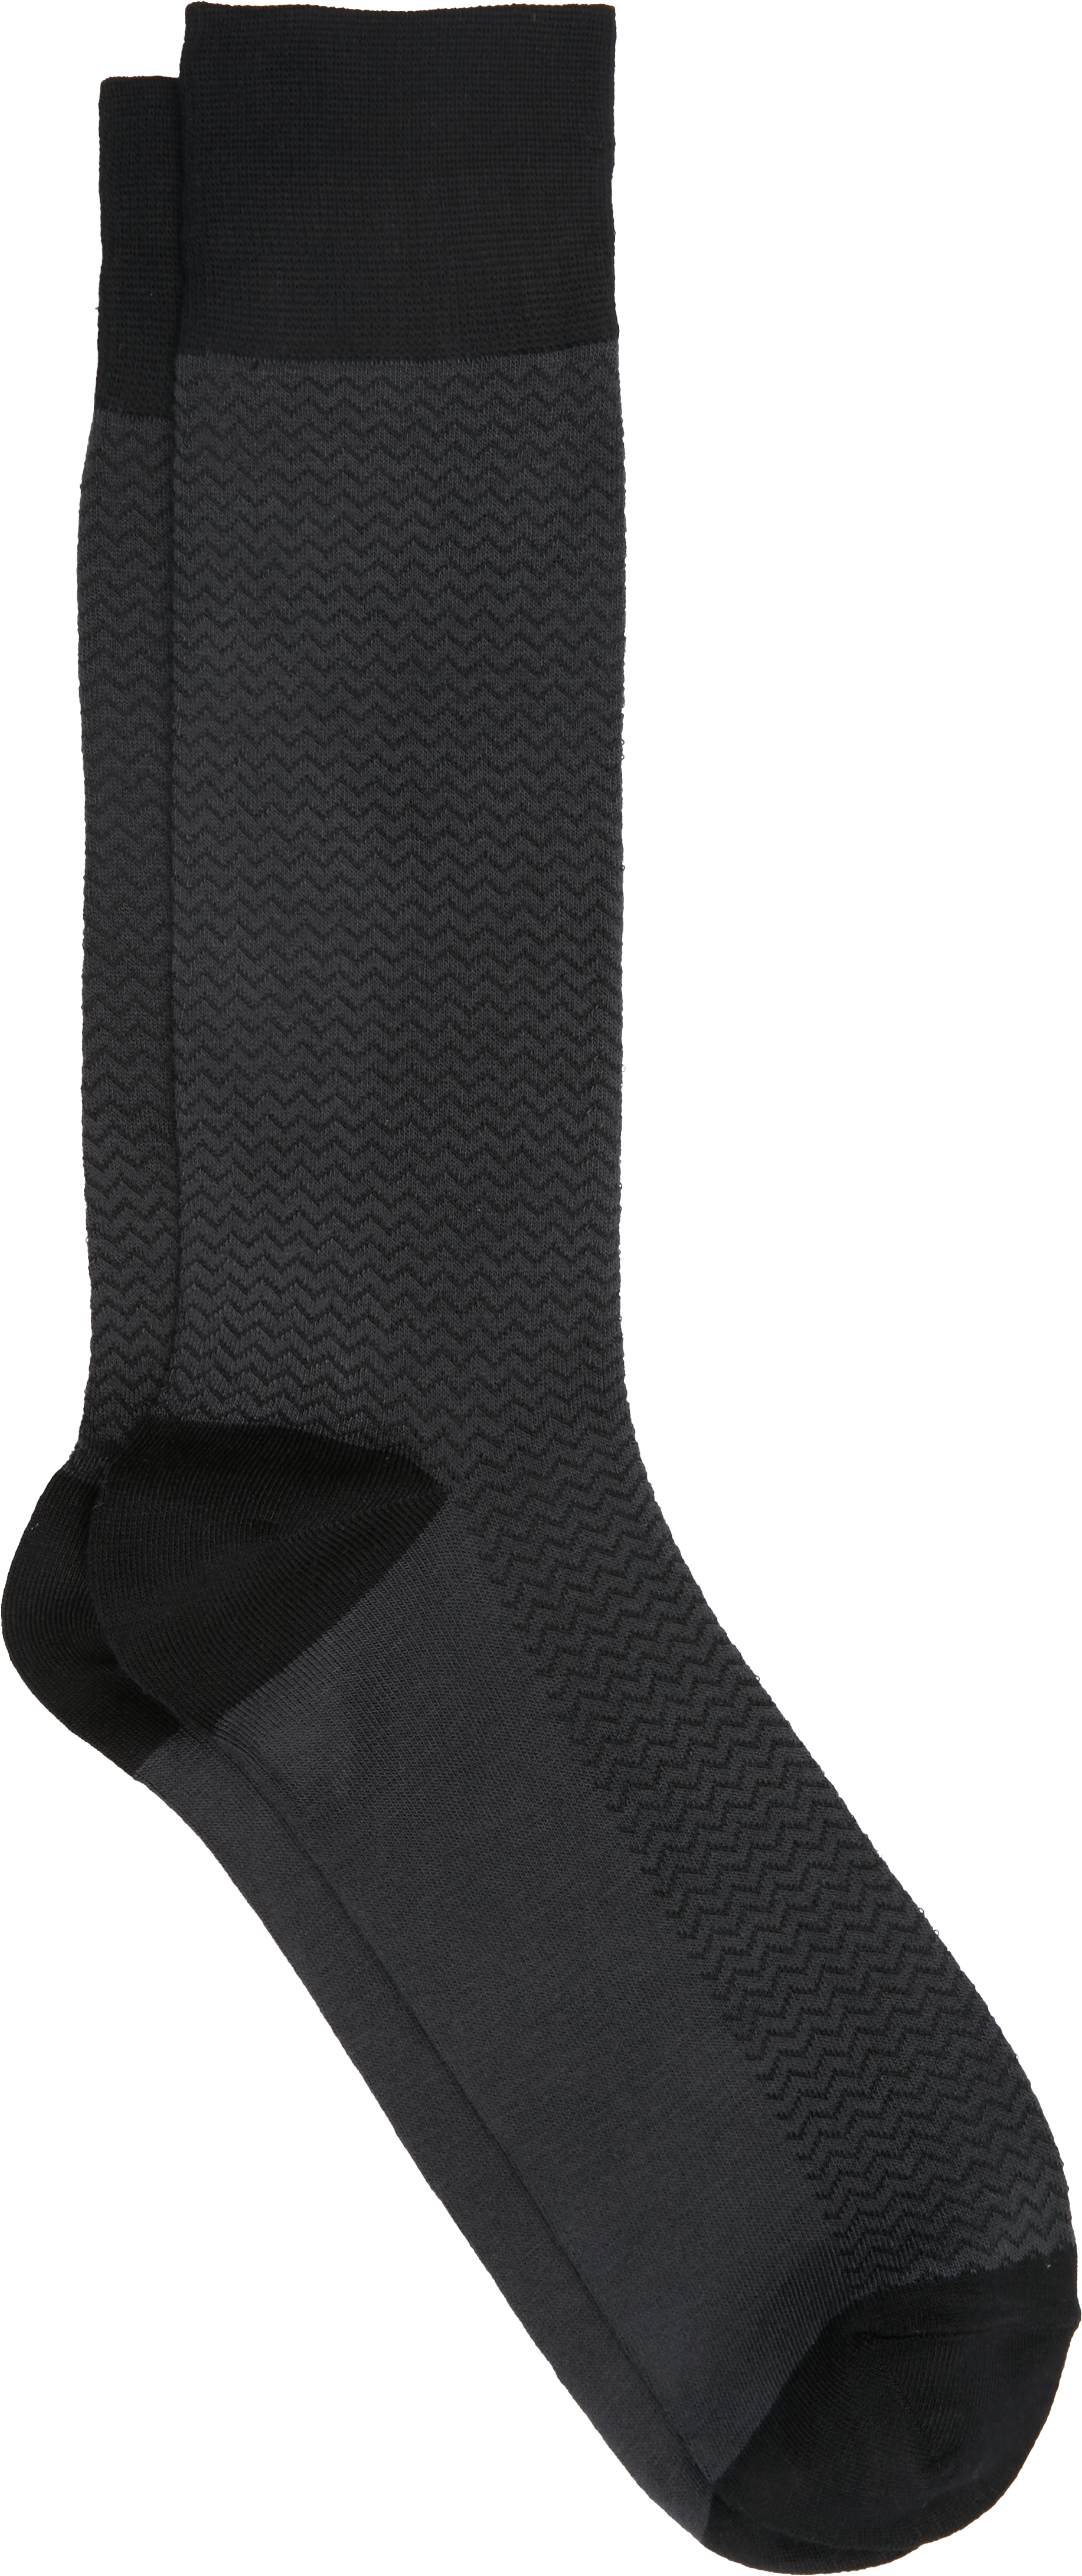 Pronto Uomo Socks, Black Tonal Chevron - Men's Accessories | Men's ...